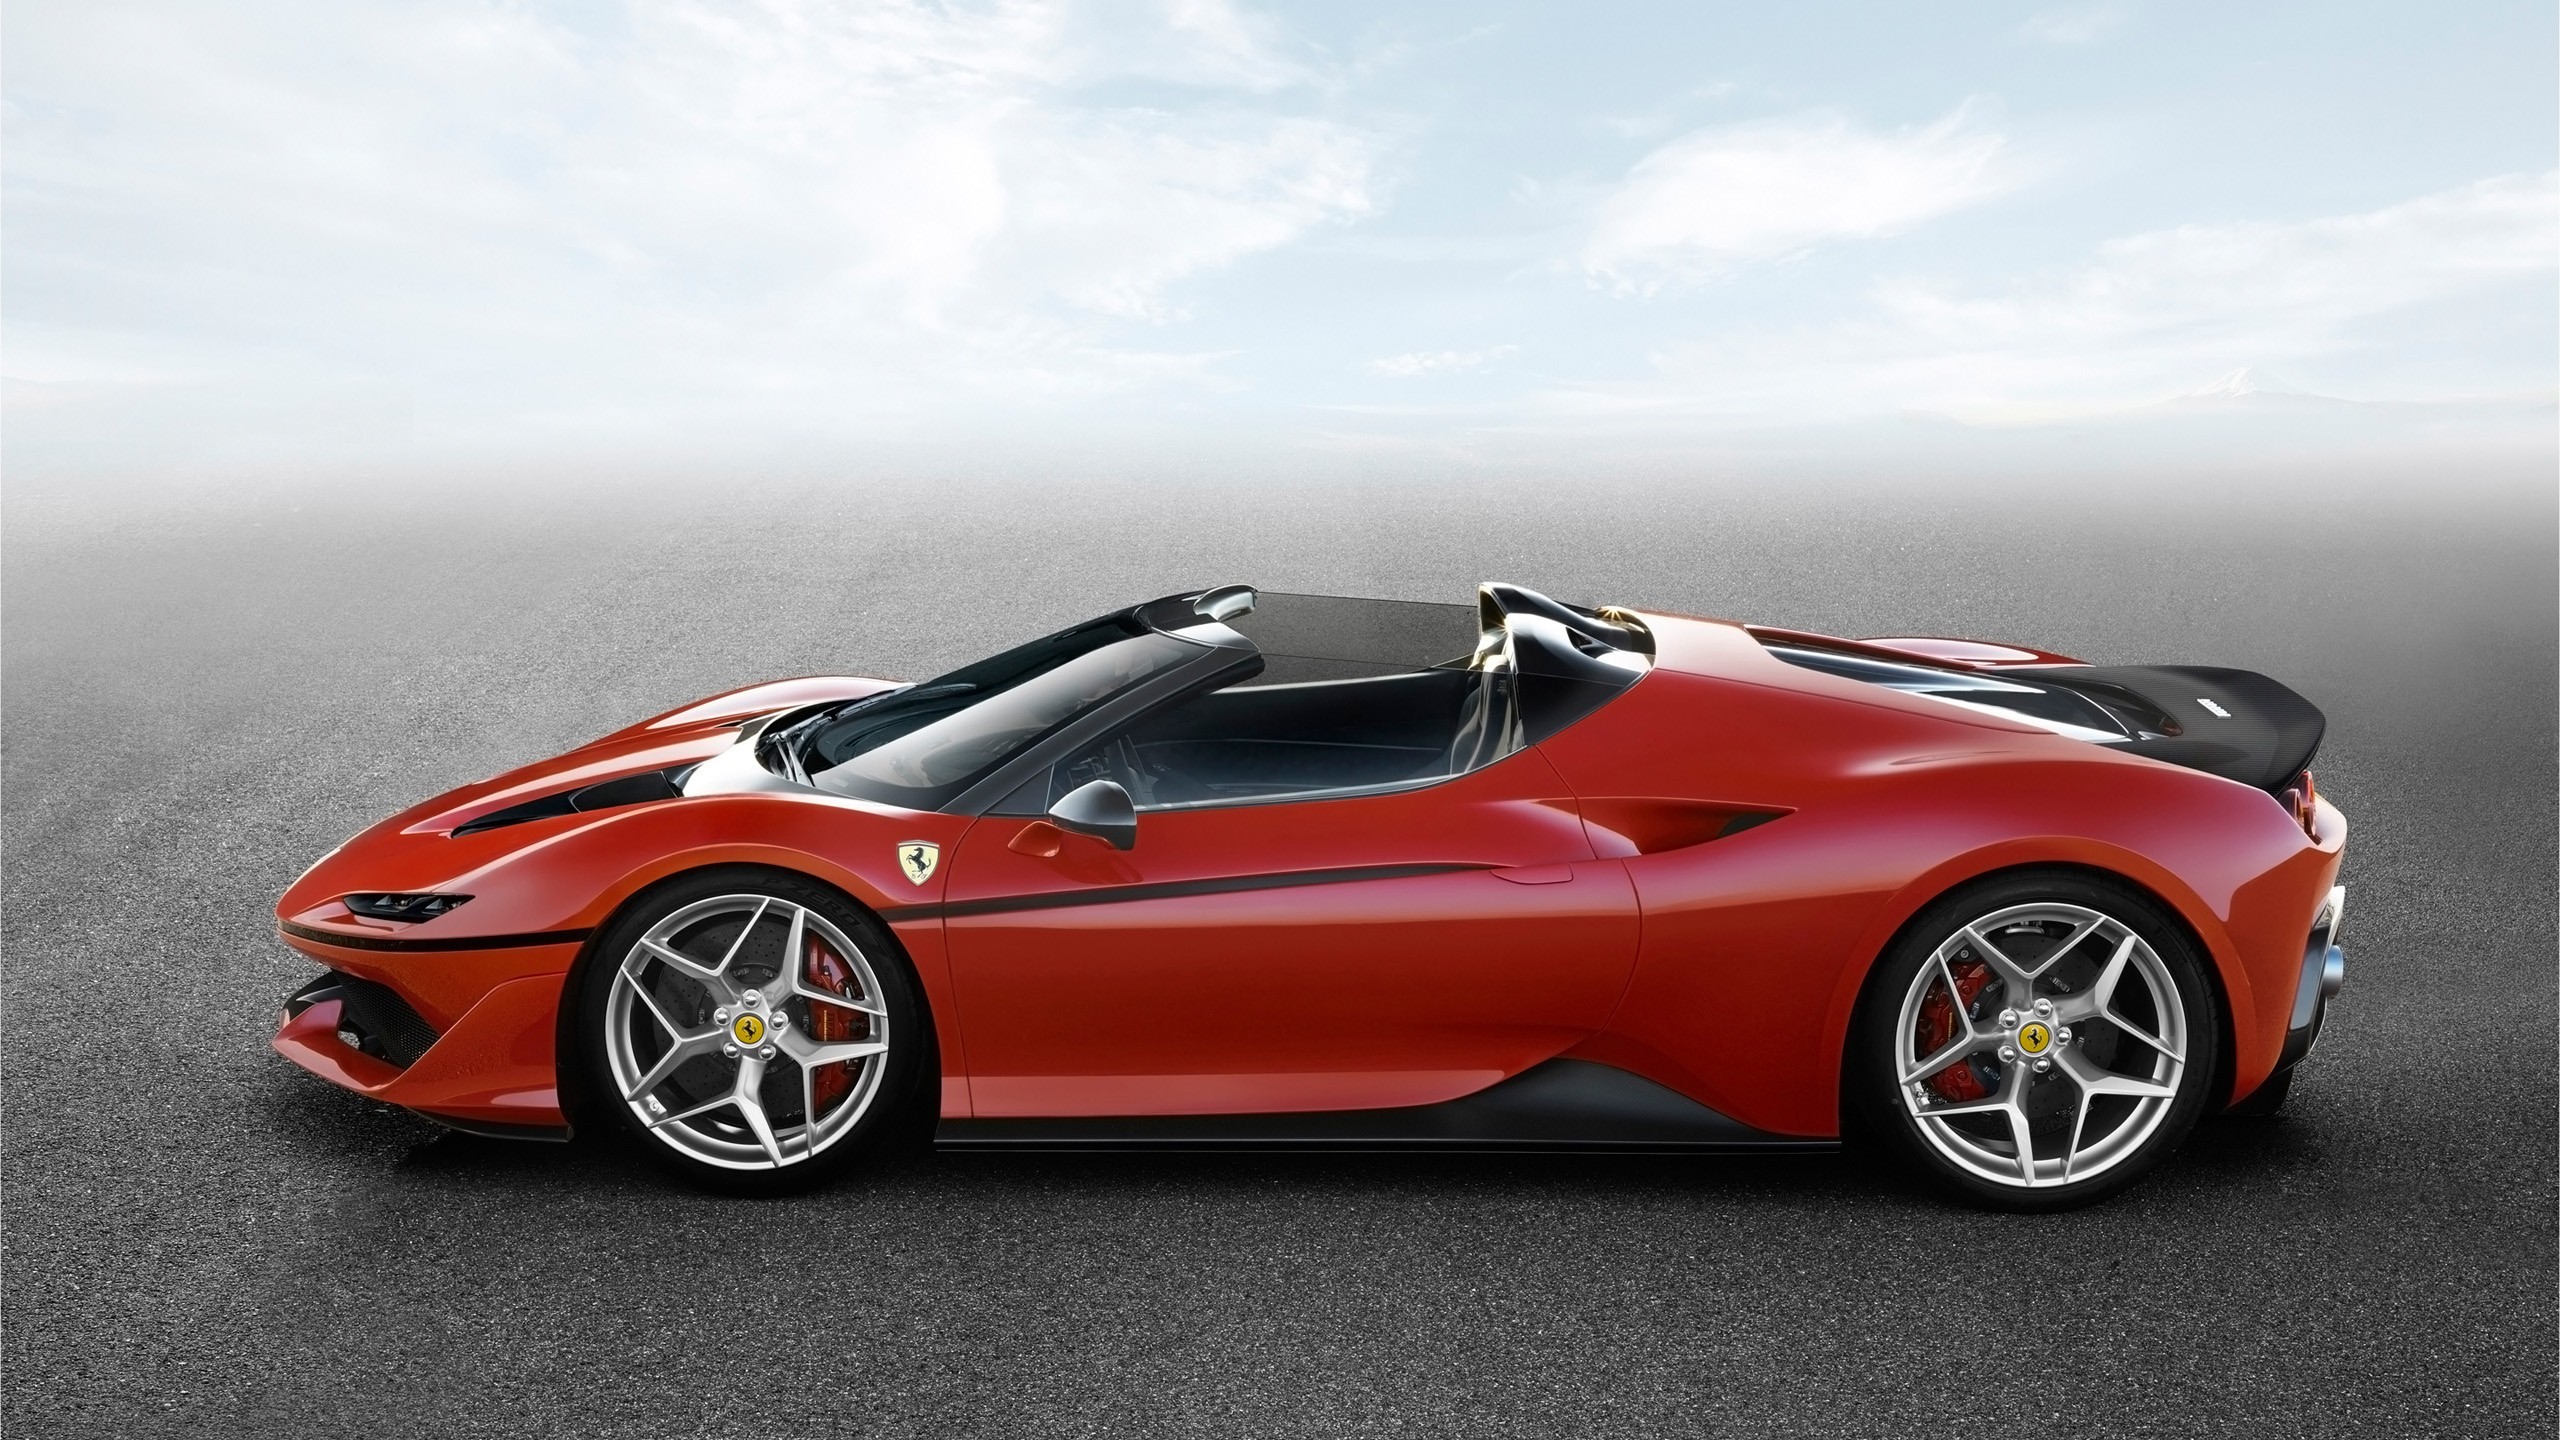 2560x1440 Automotive / Cars / Ferrari J50 Wallpaper